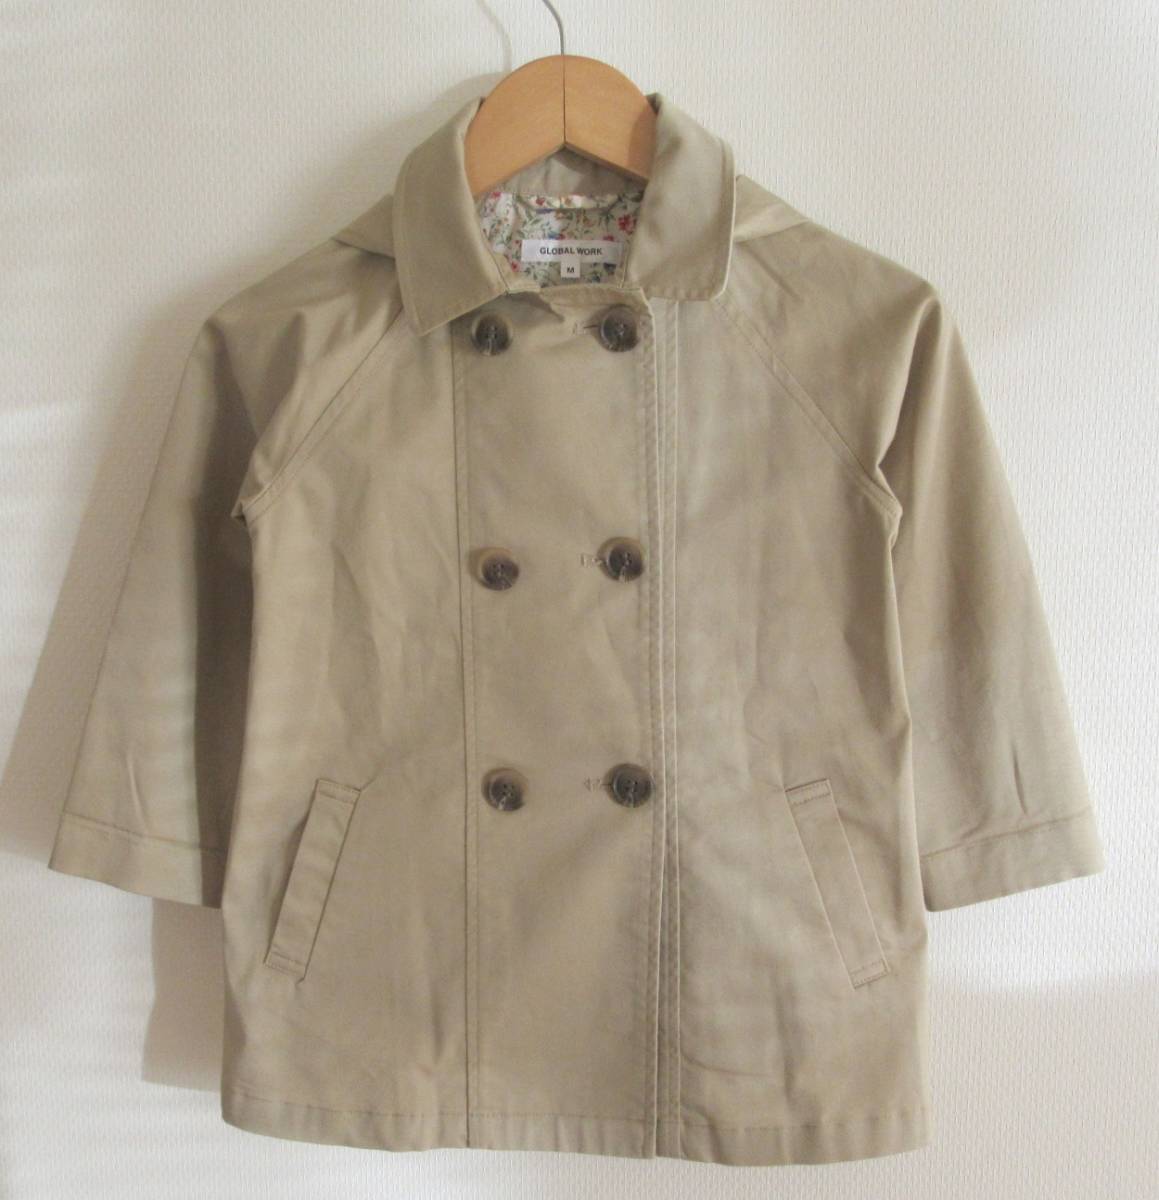 * GLOBAL WORK Kids trench coat 100-110 size jacket 